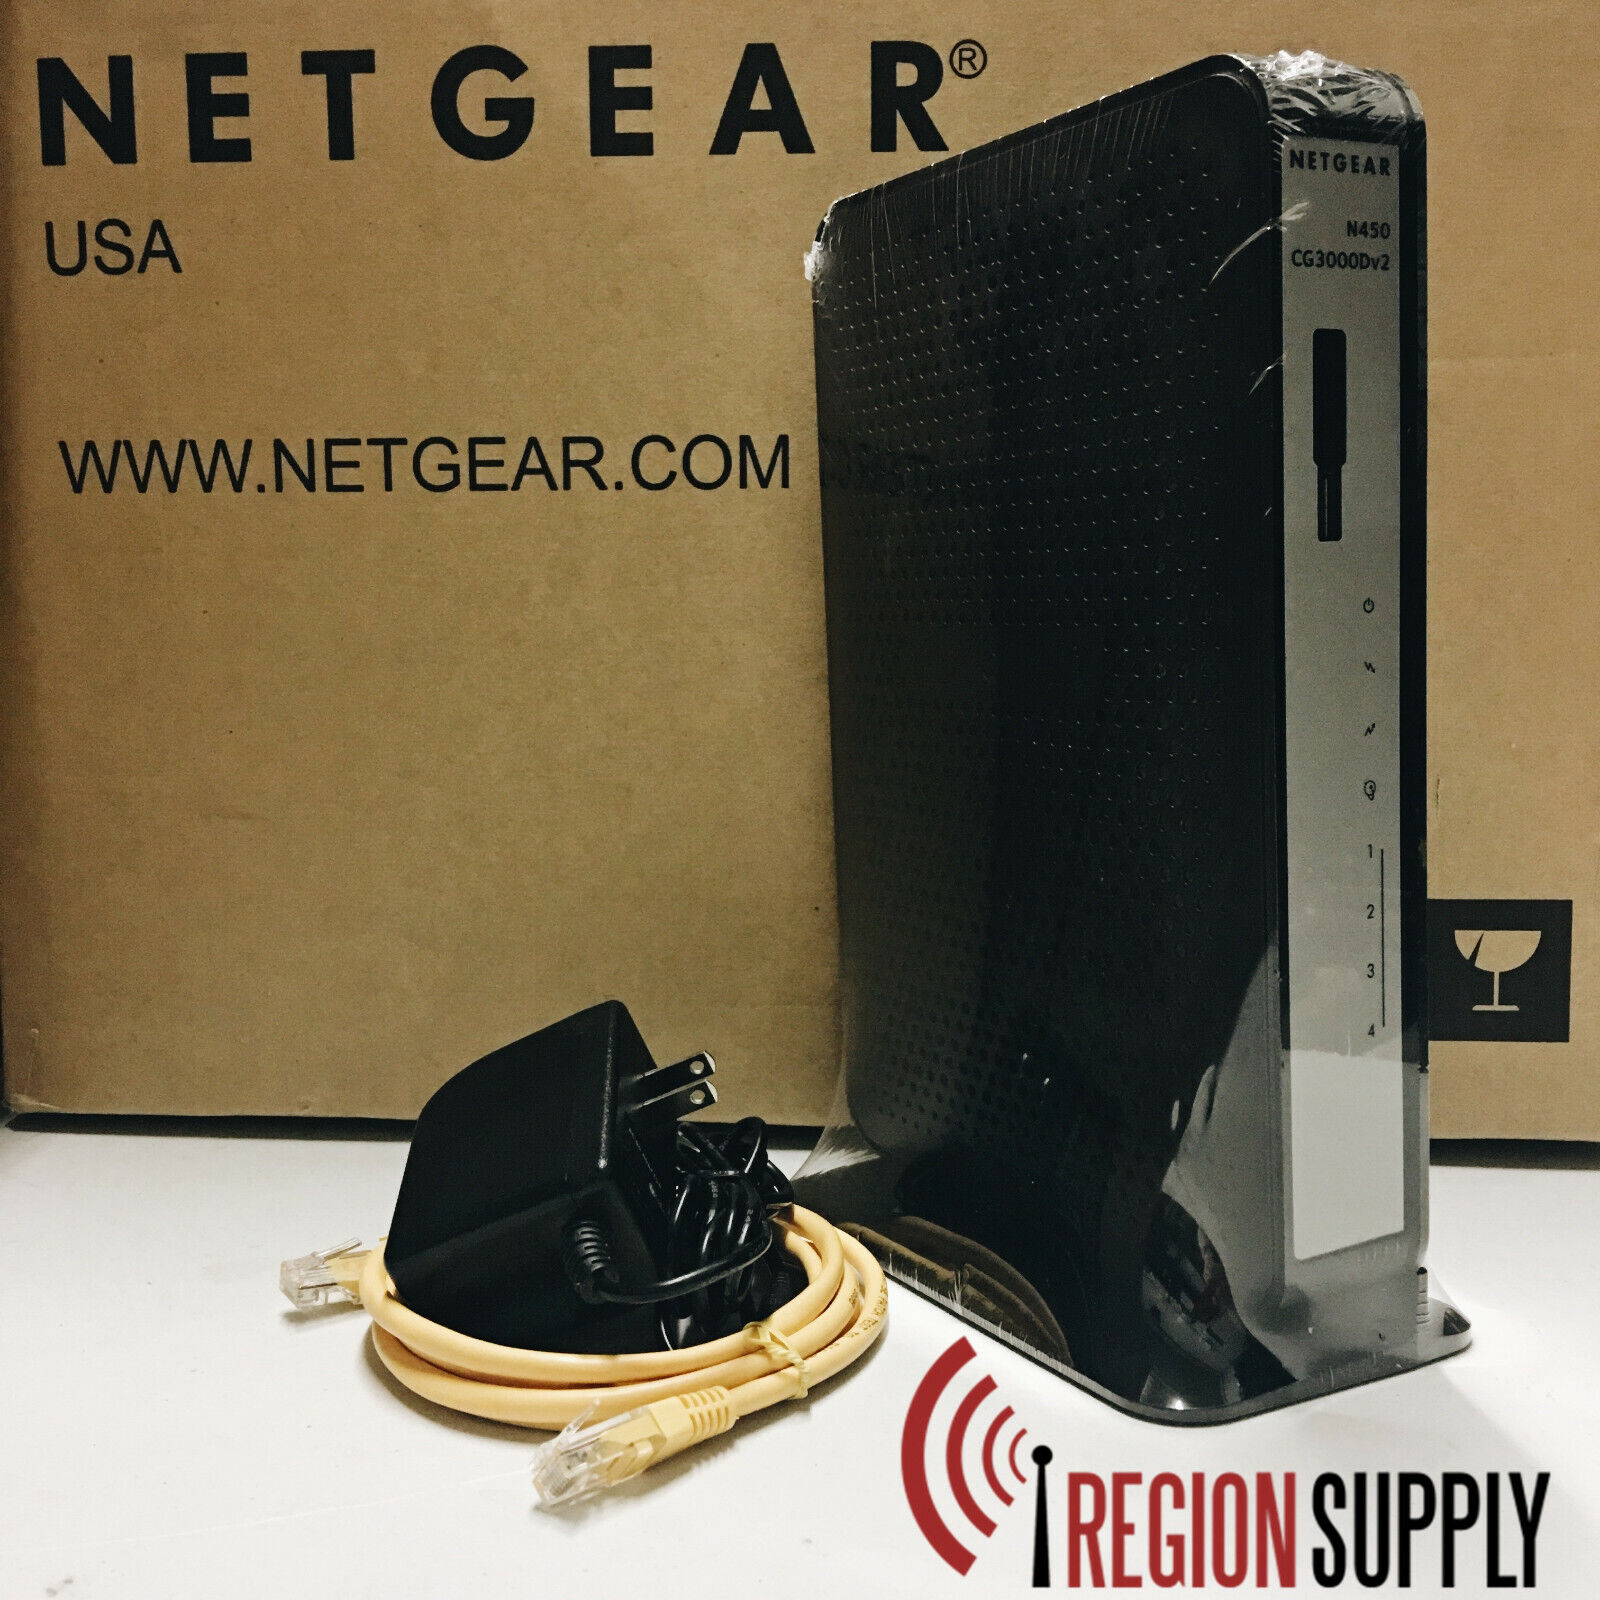 Netgear CG3000Dv2 N450 Docsis 3.0 Modem Wireless Router Comcast Xfinity SEALED